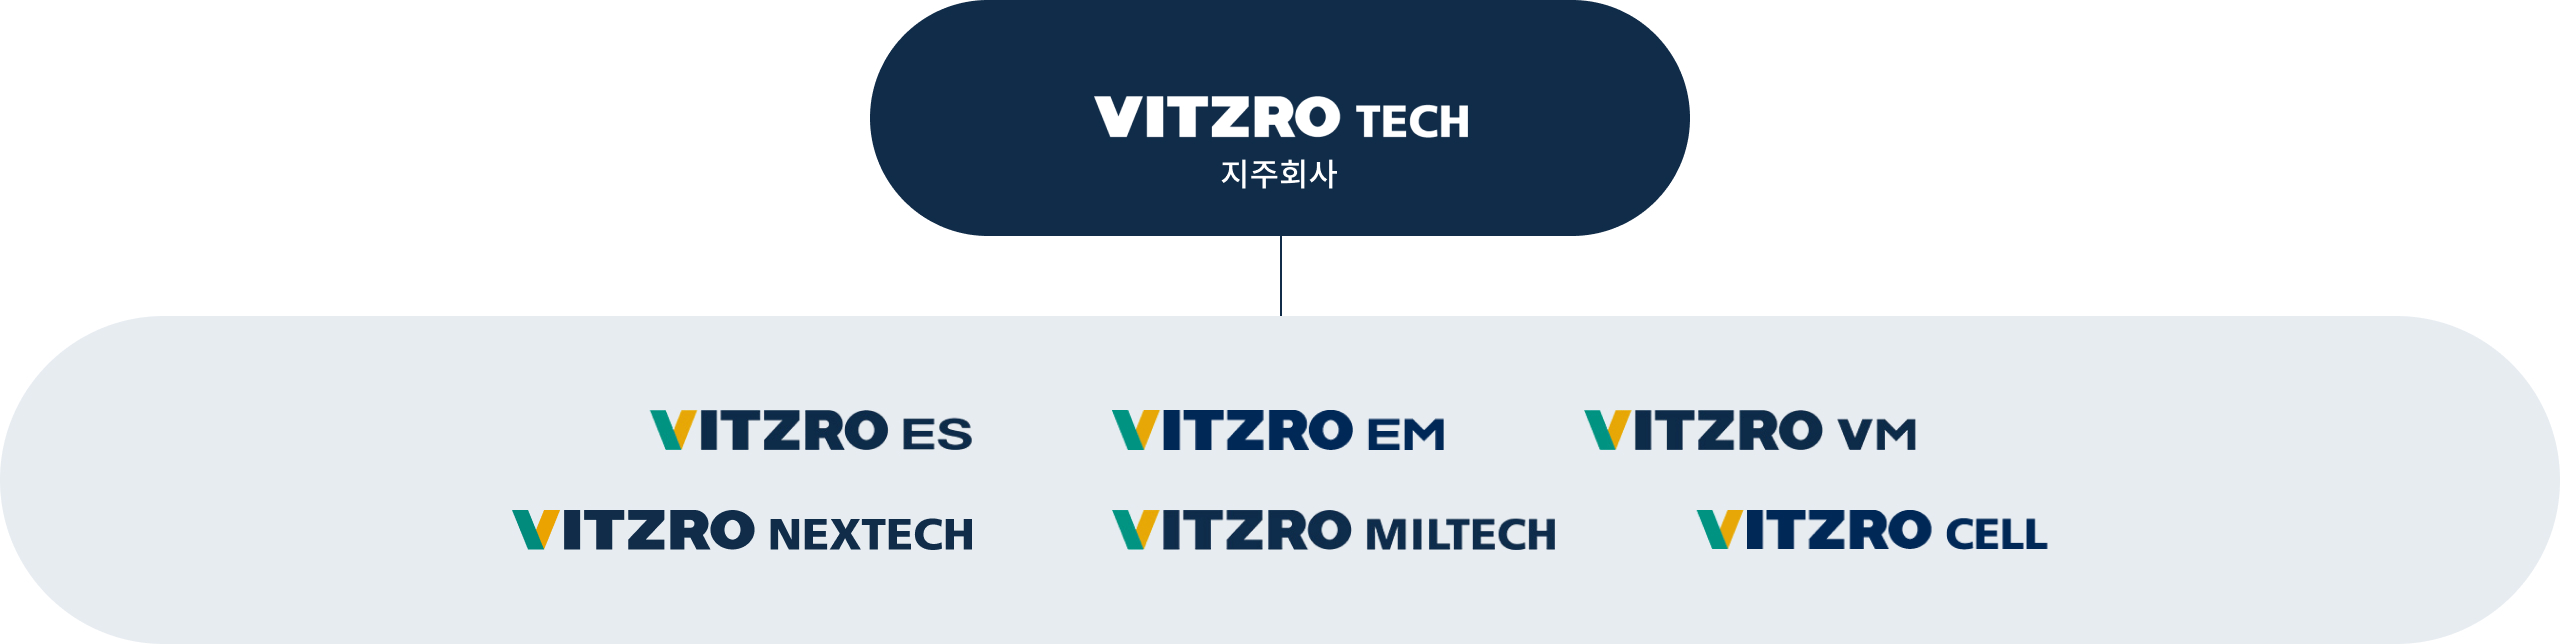 VITZRO TECH(지주회사) - VITZRO ES / VITZRO EM / VITZRO VM / VITZRO NEXTECH / VITZRO MILTECH / VITZRO CELL